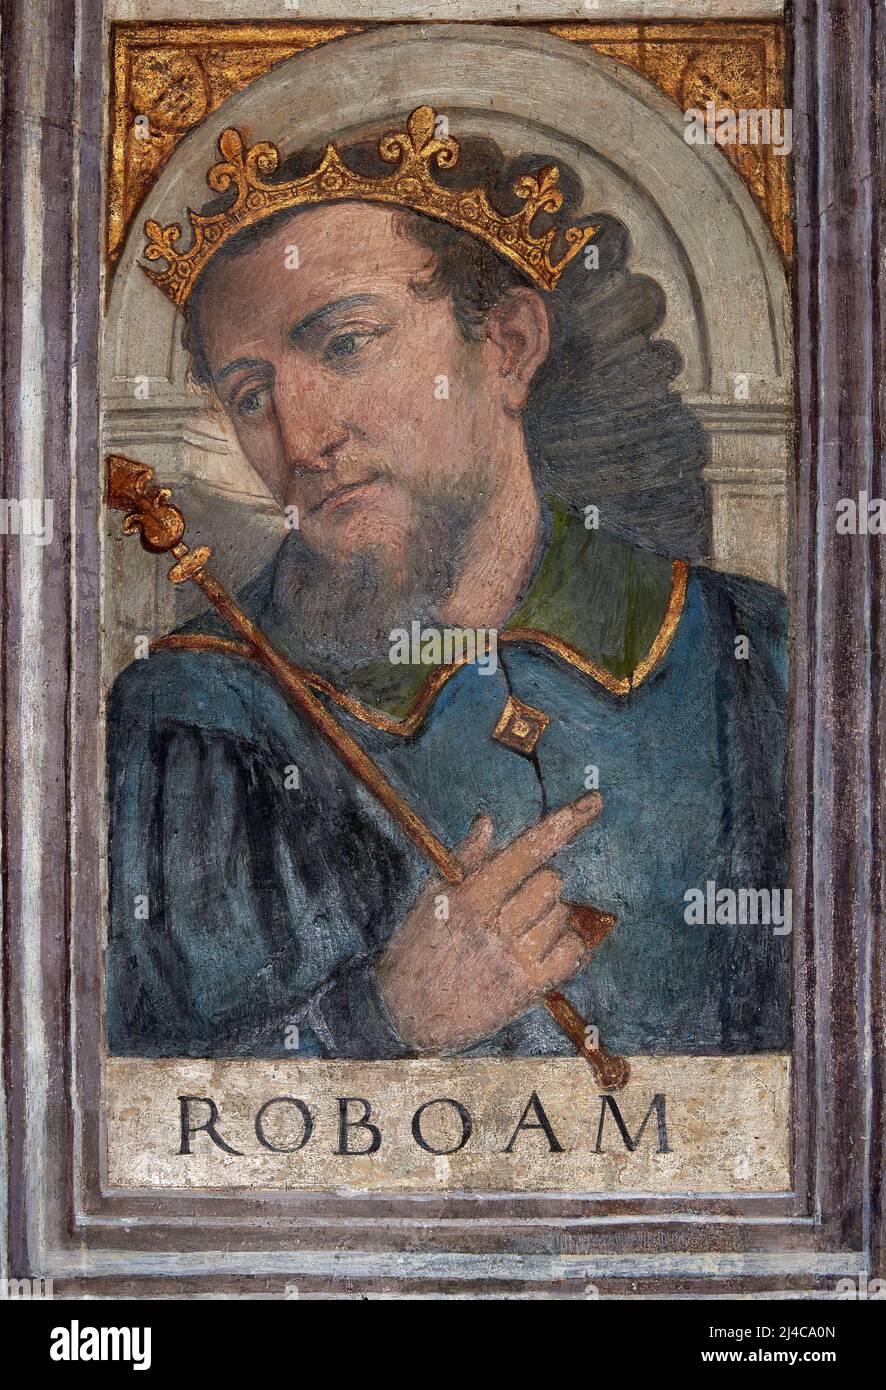 Roboamo. re di Israele - affresco - Girolamo Tessari - 1526 - Padova, chiesa di S. Francesco Grande Stock Photo